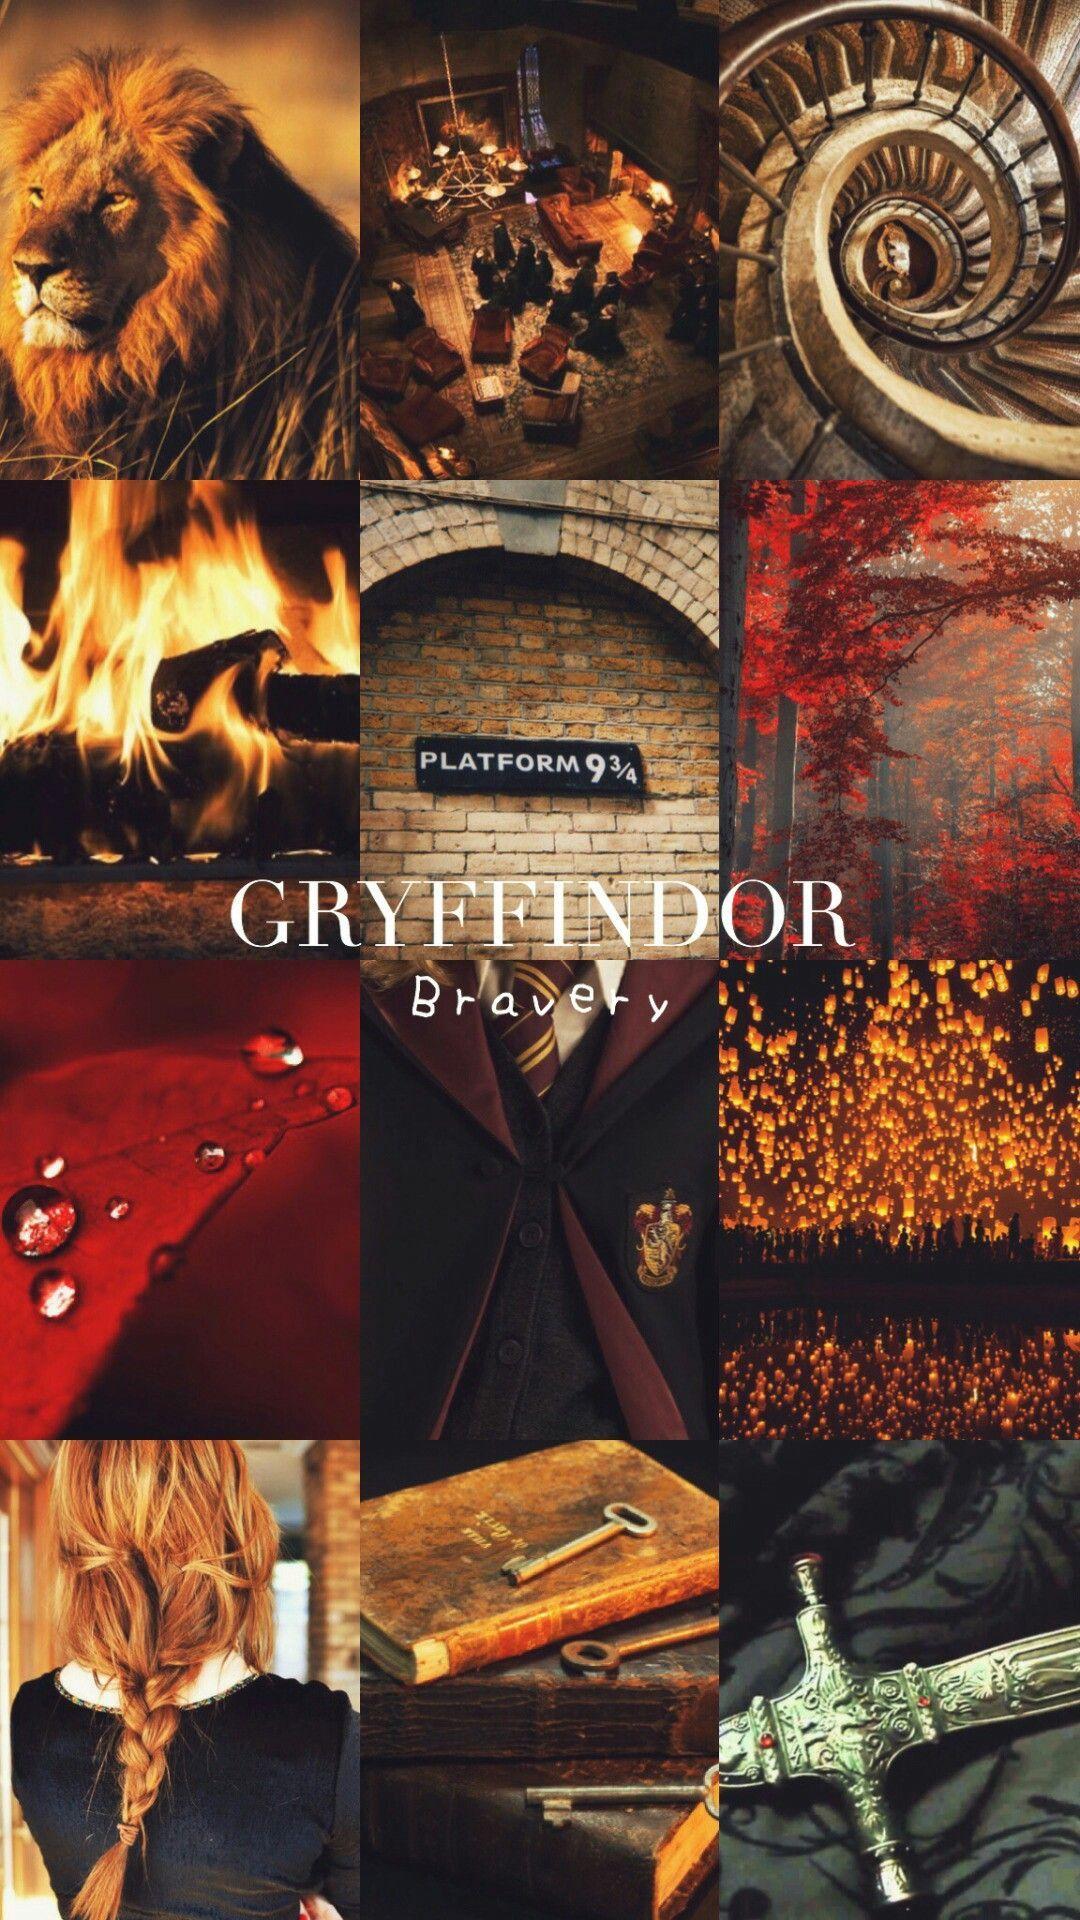 Harry Potter Gryffindor Wallpapers - Wallpaper Cave